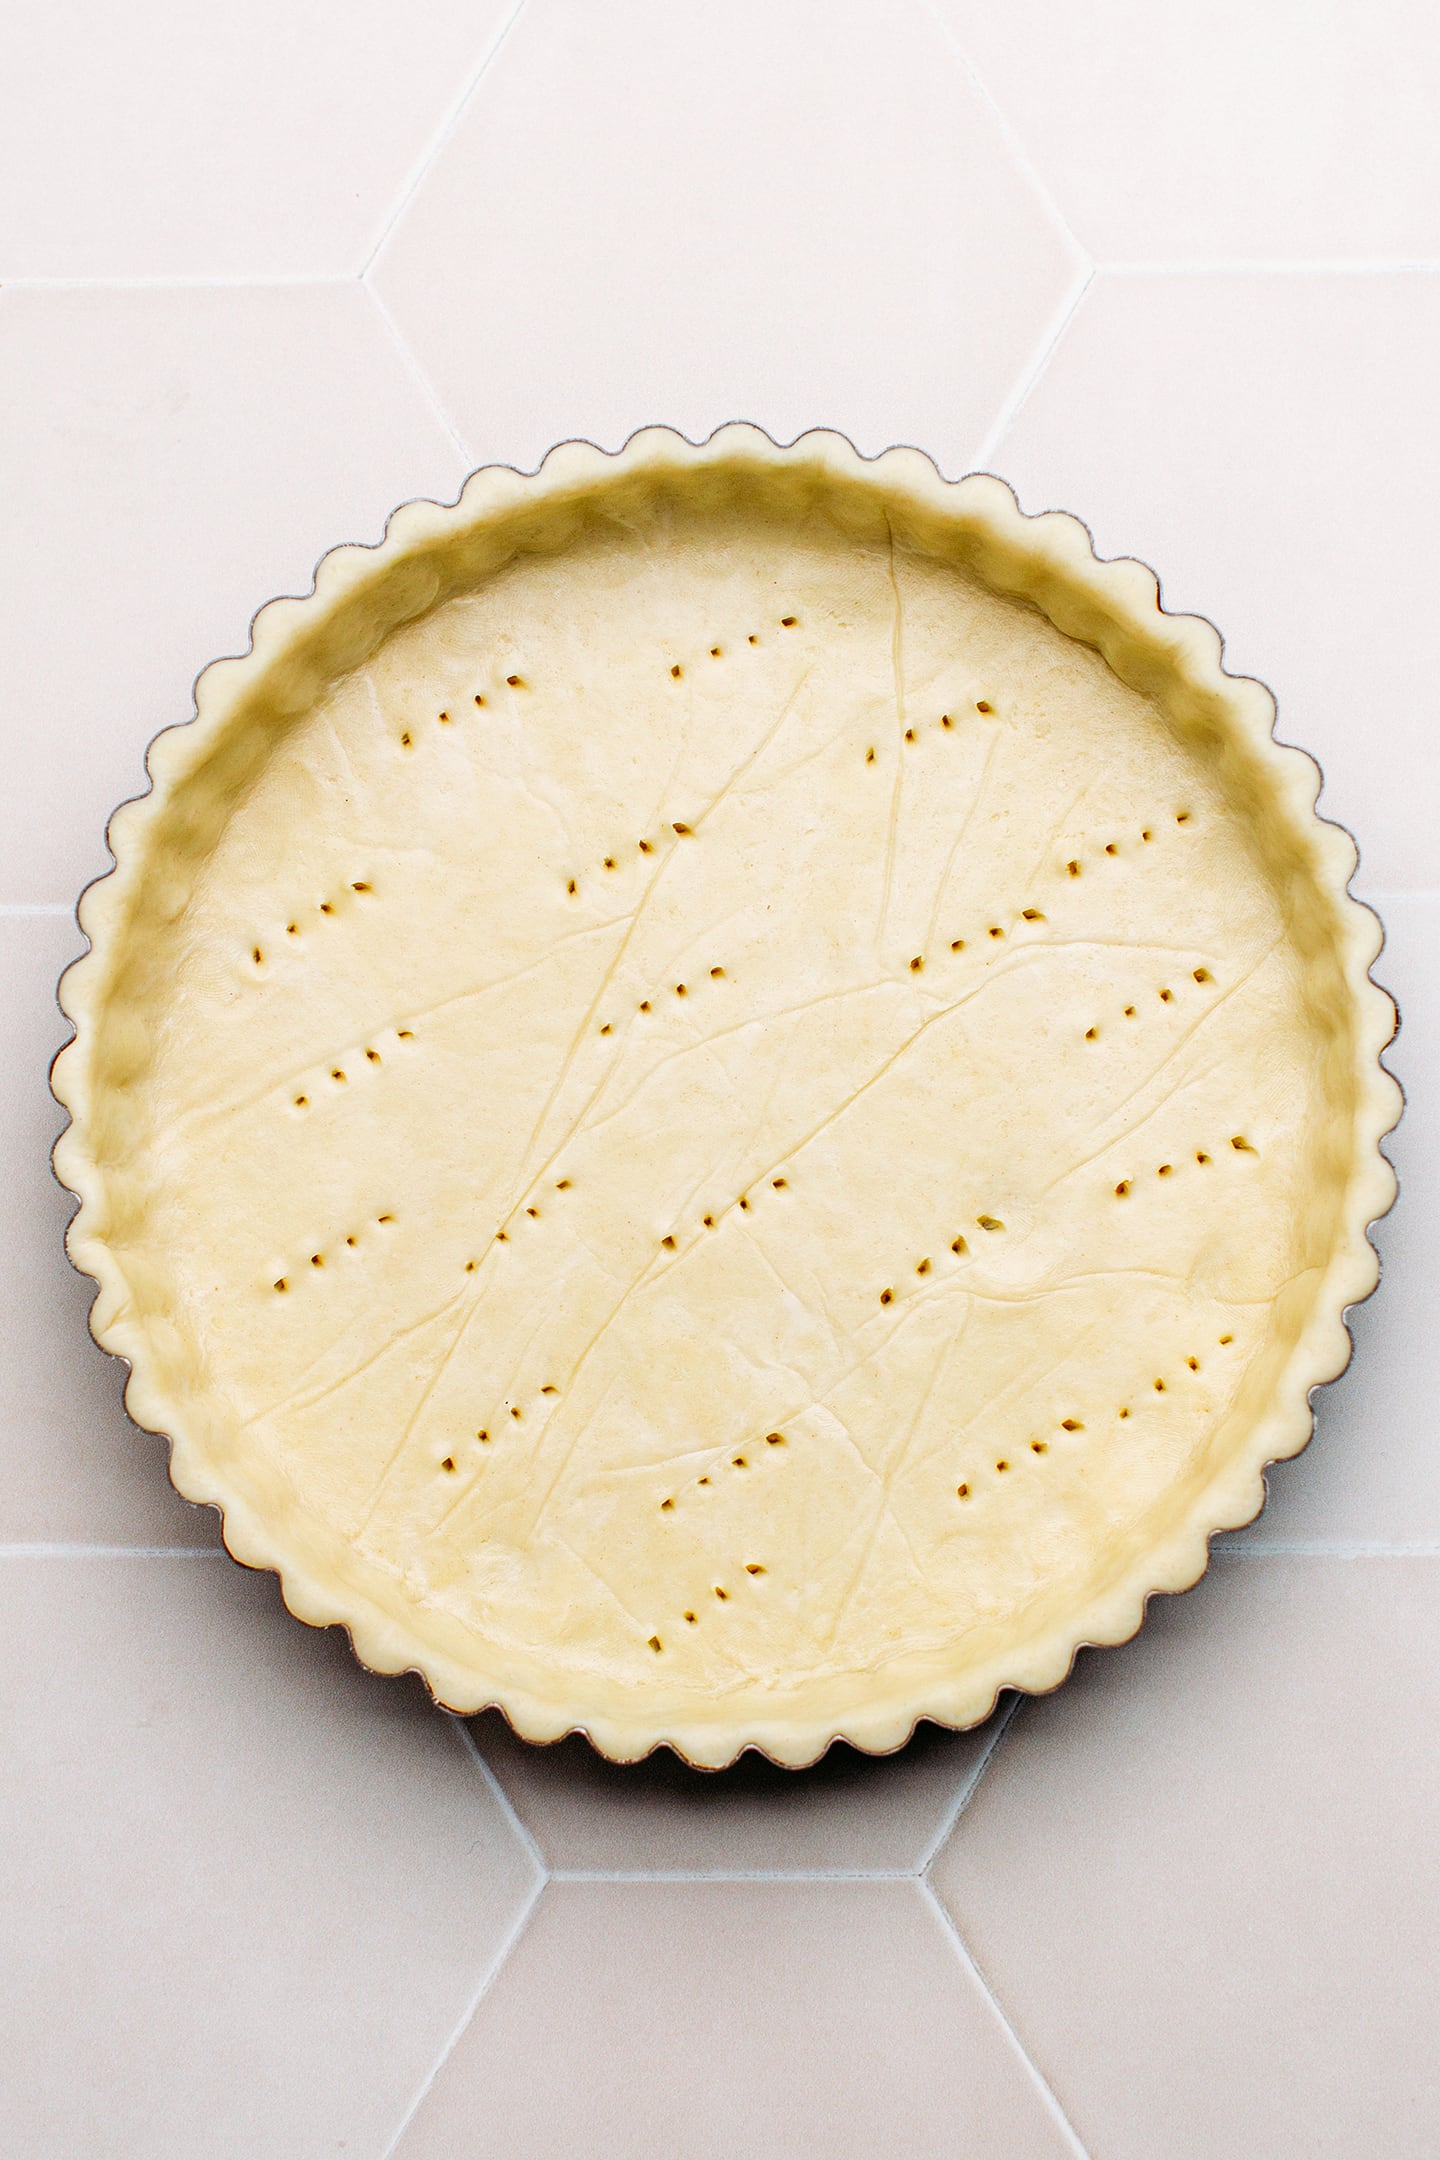 Pie crust in a pie pan.